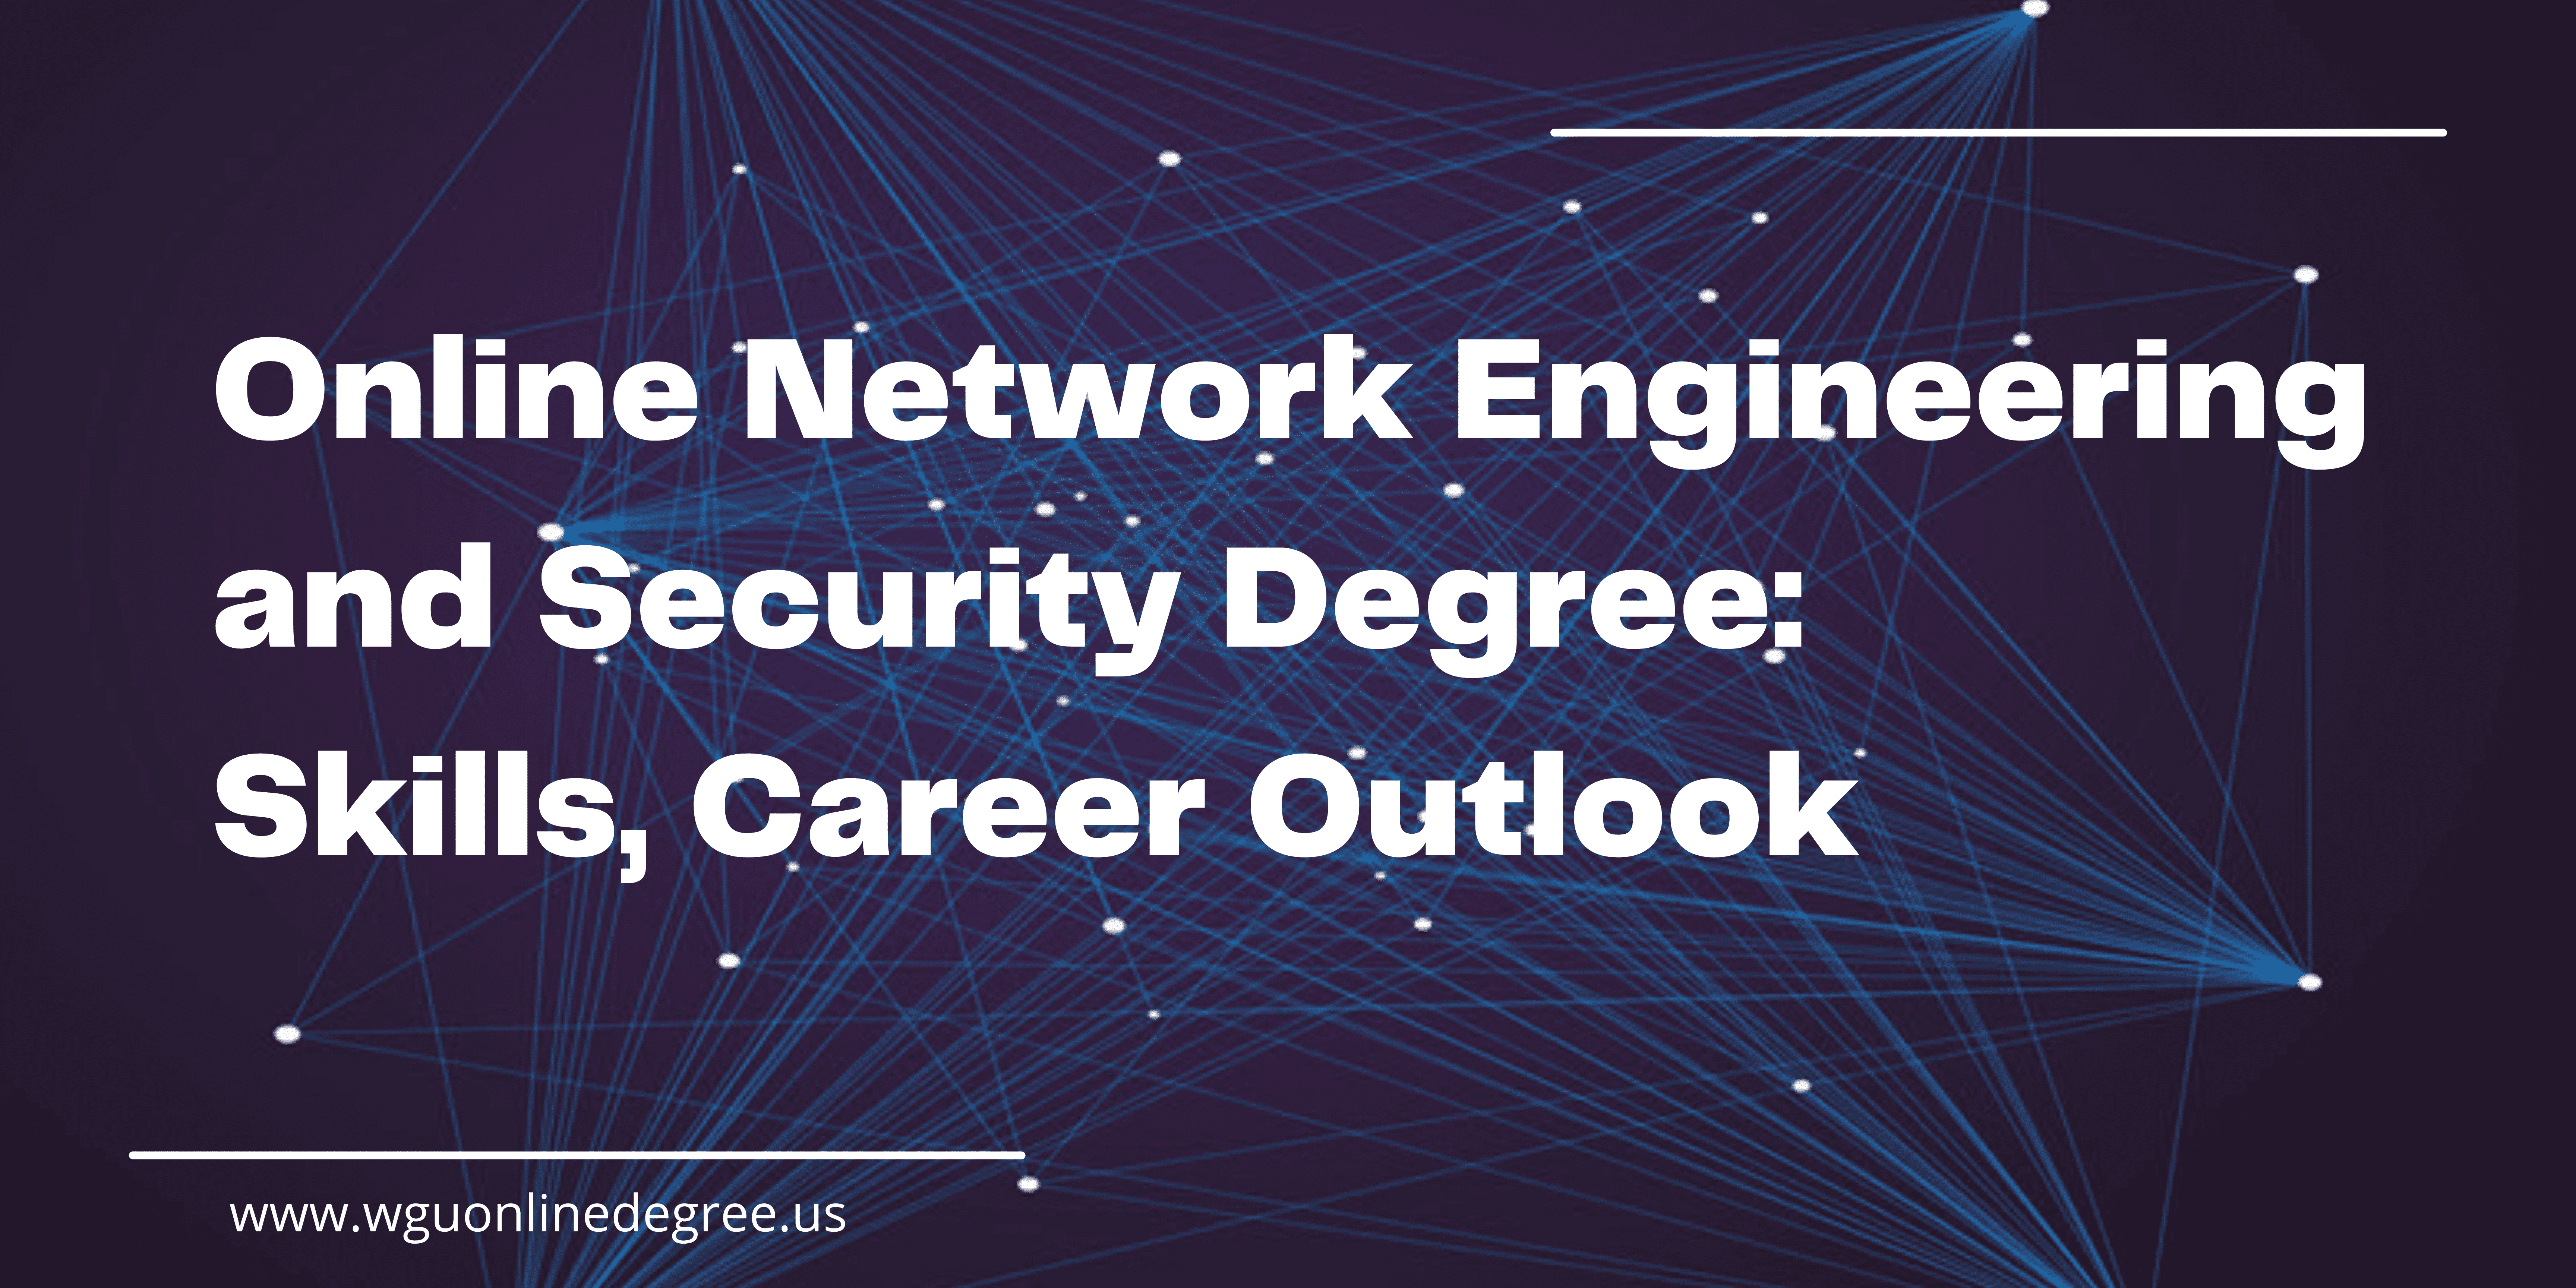 Online Network Engineering and Security Degree: Skills, Career Outlook